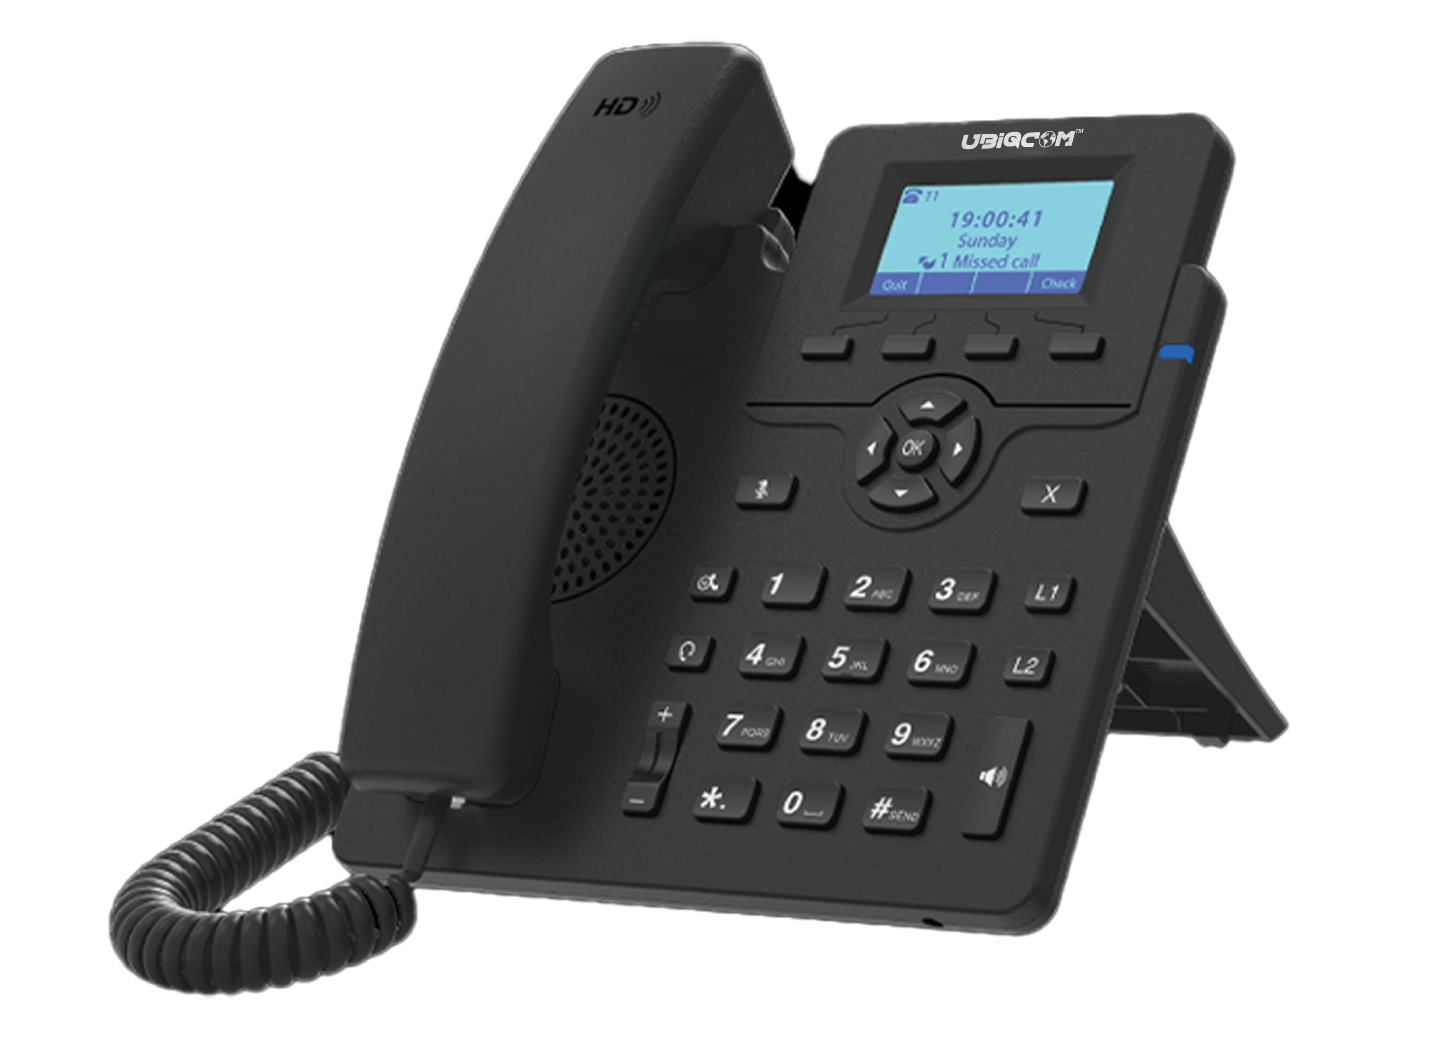  UB600 Enterprise IP Phone